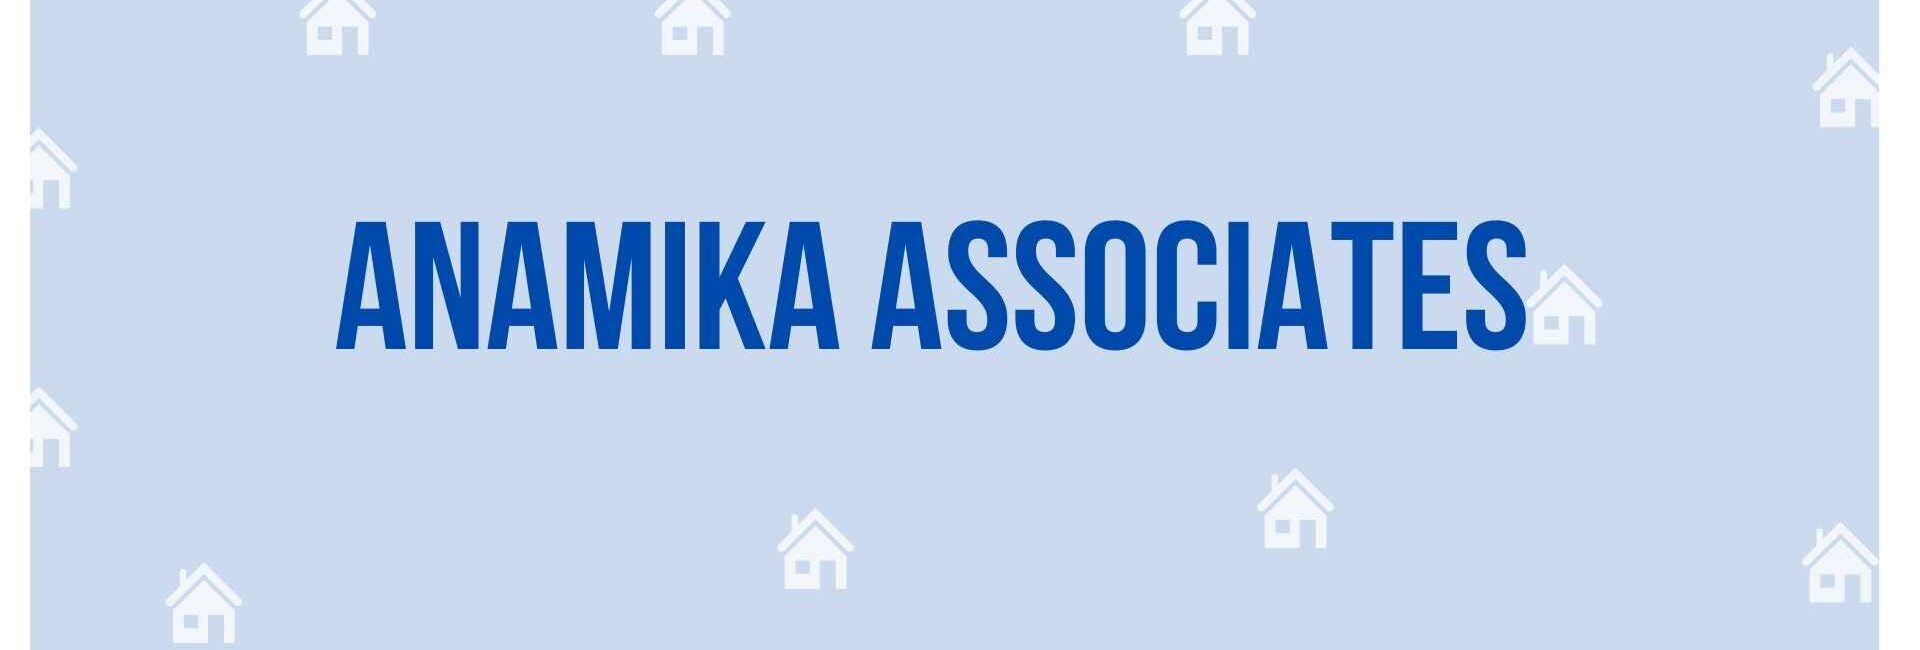 Anamika Associates - Property Dealer in Noida